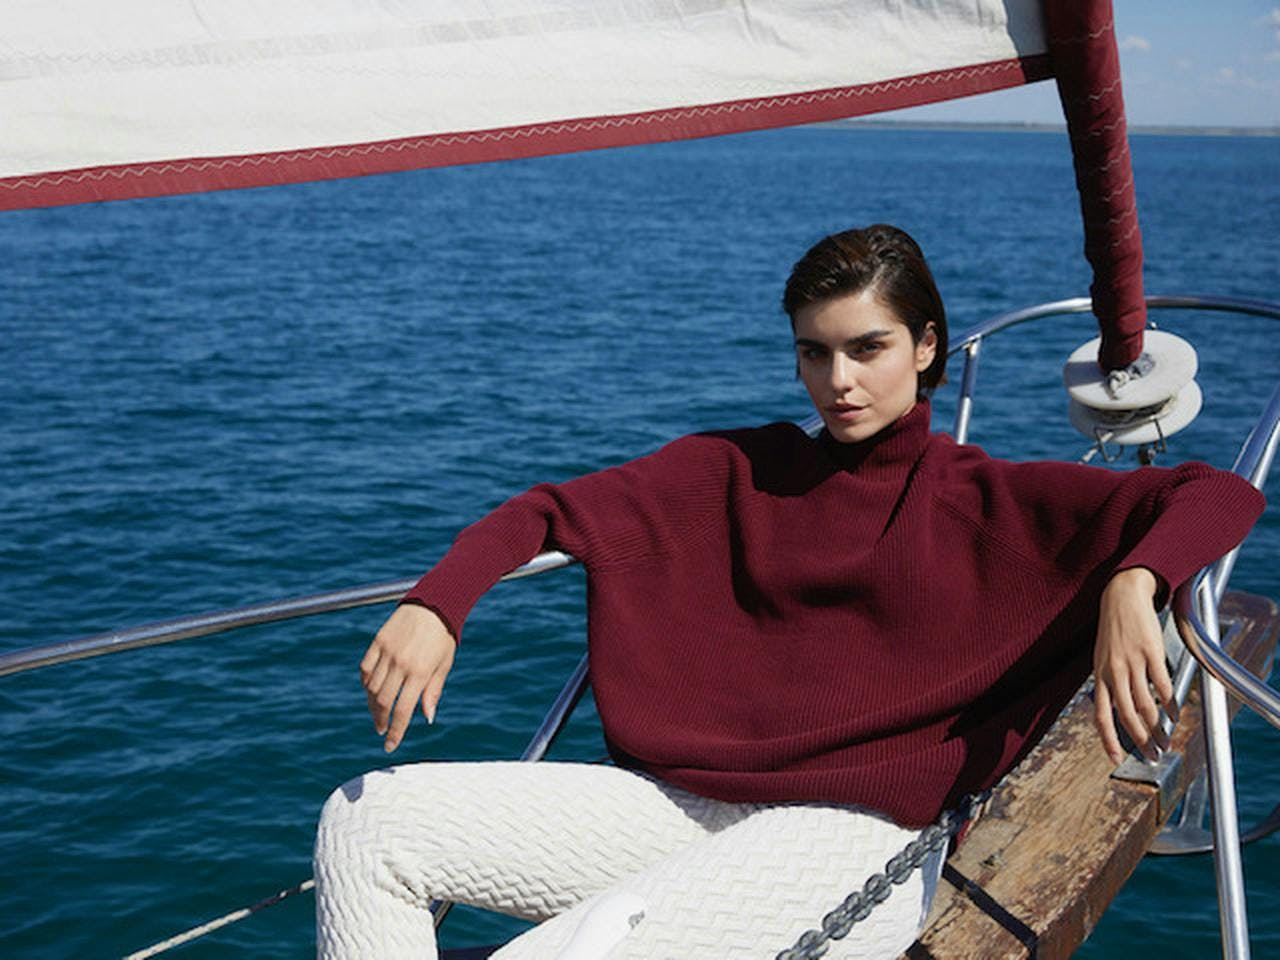 sailboat boat vehicle watercraft person vest clothing lifejacket sweater knitwear